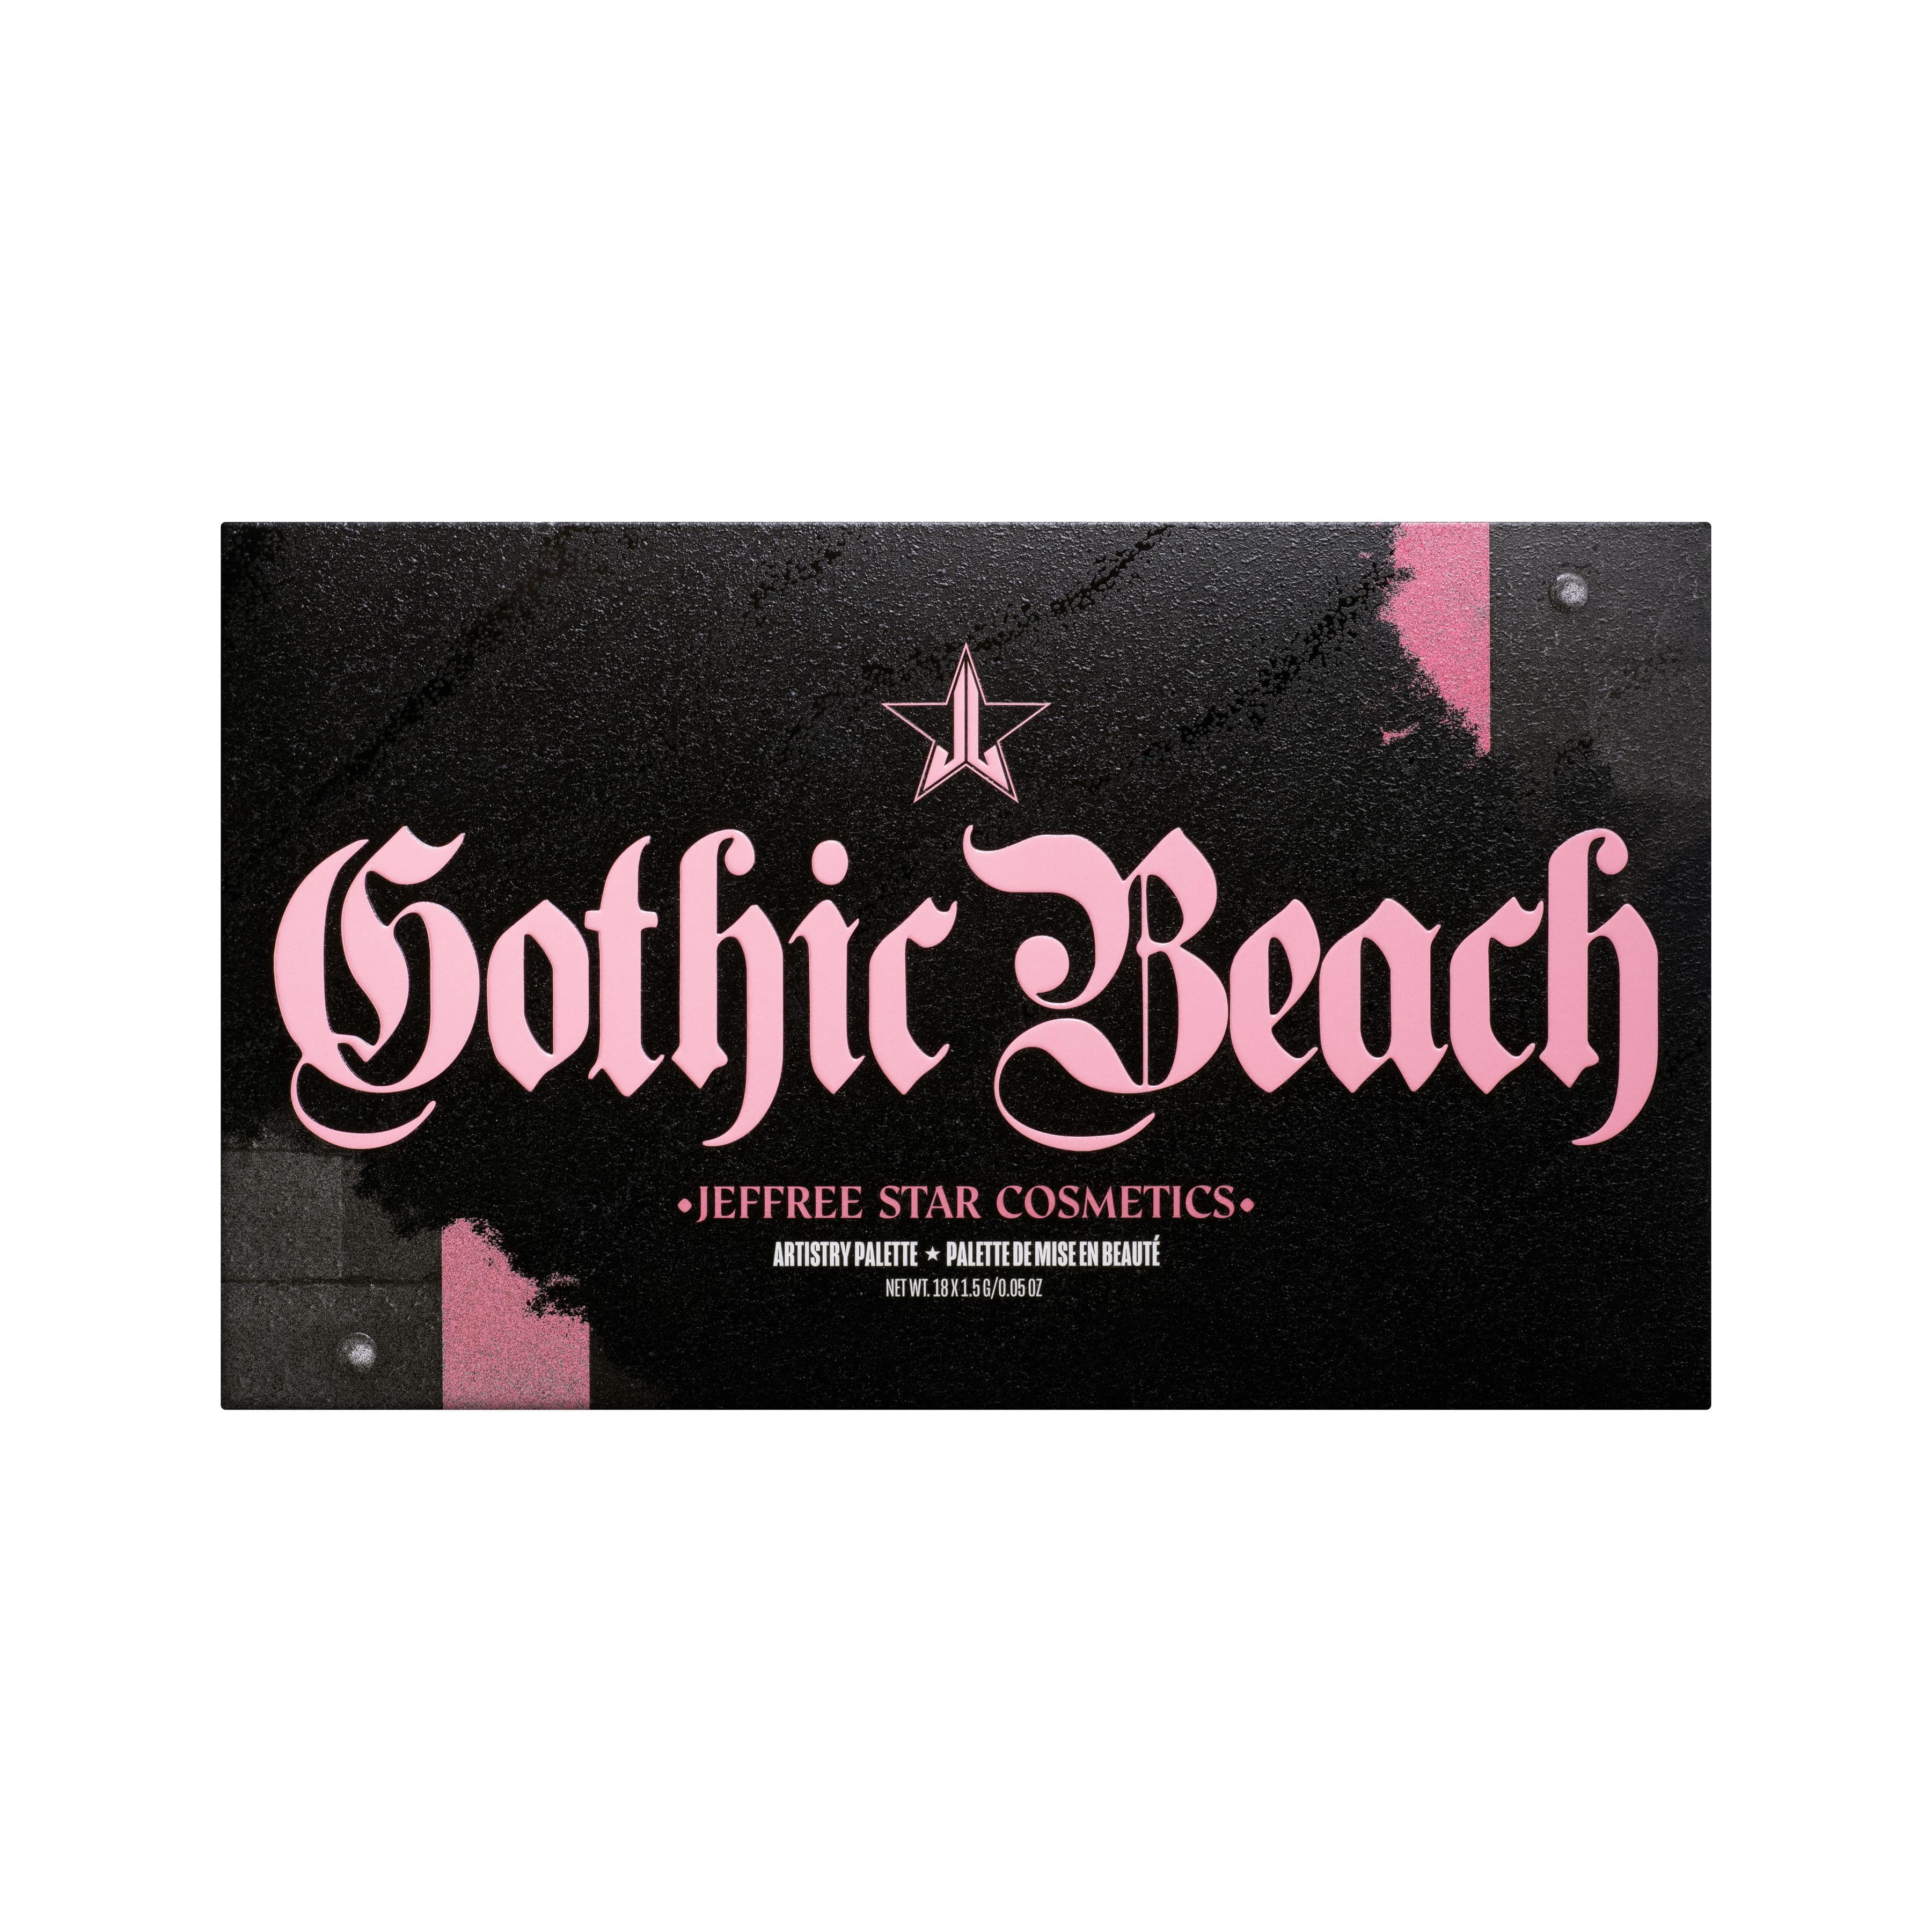 Gothic Beach Palette